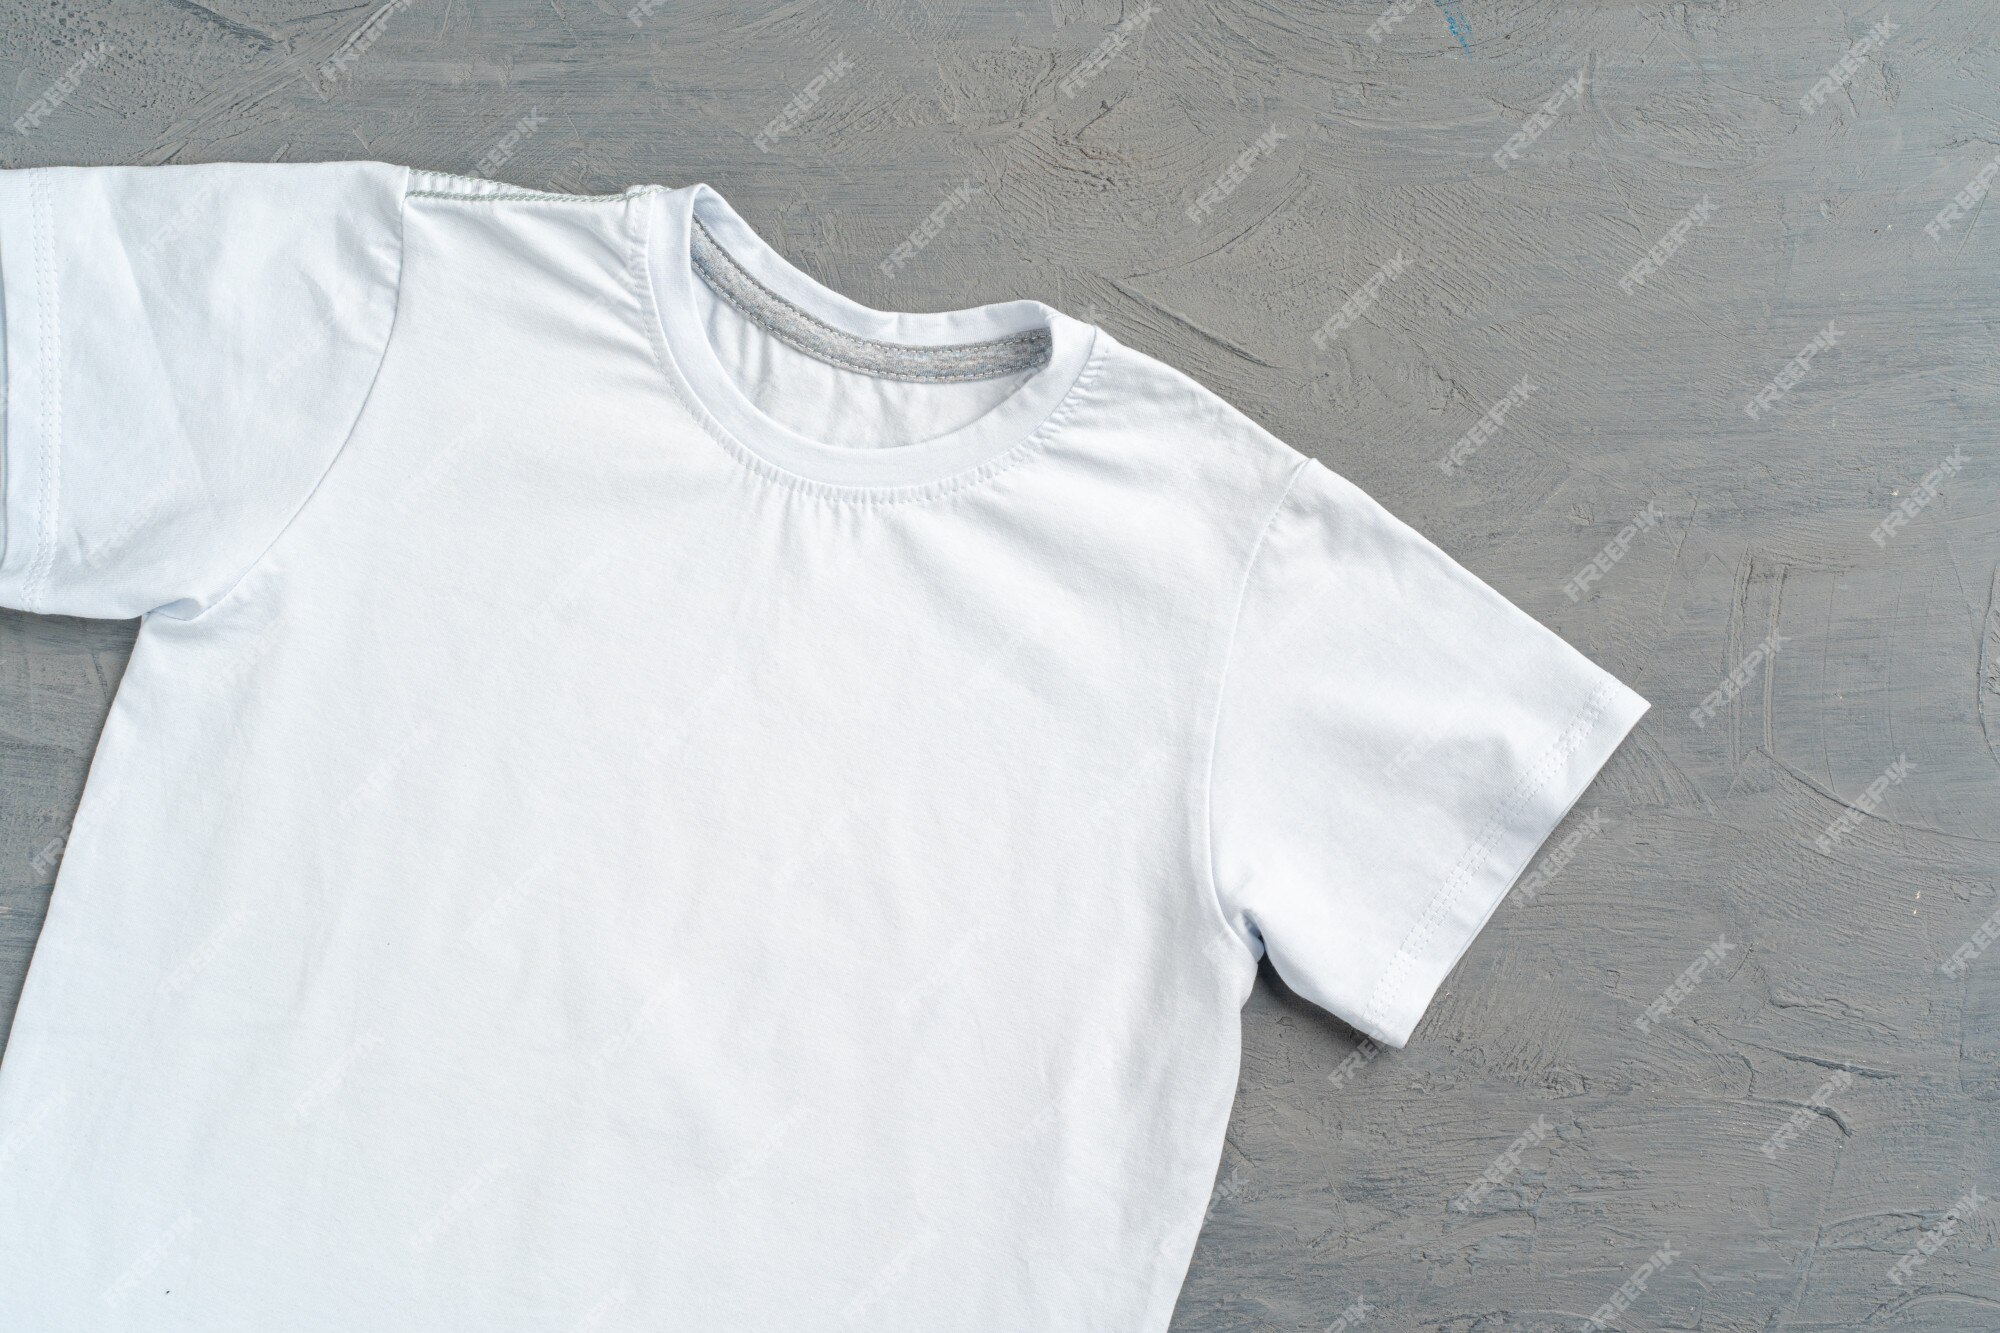 Premium Photo | Close up of a white t-shirt